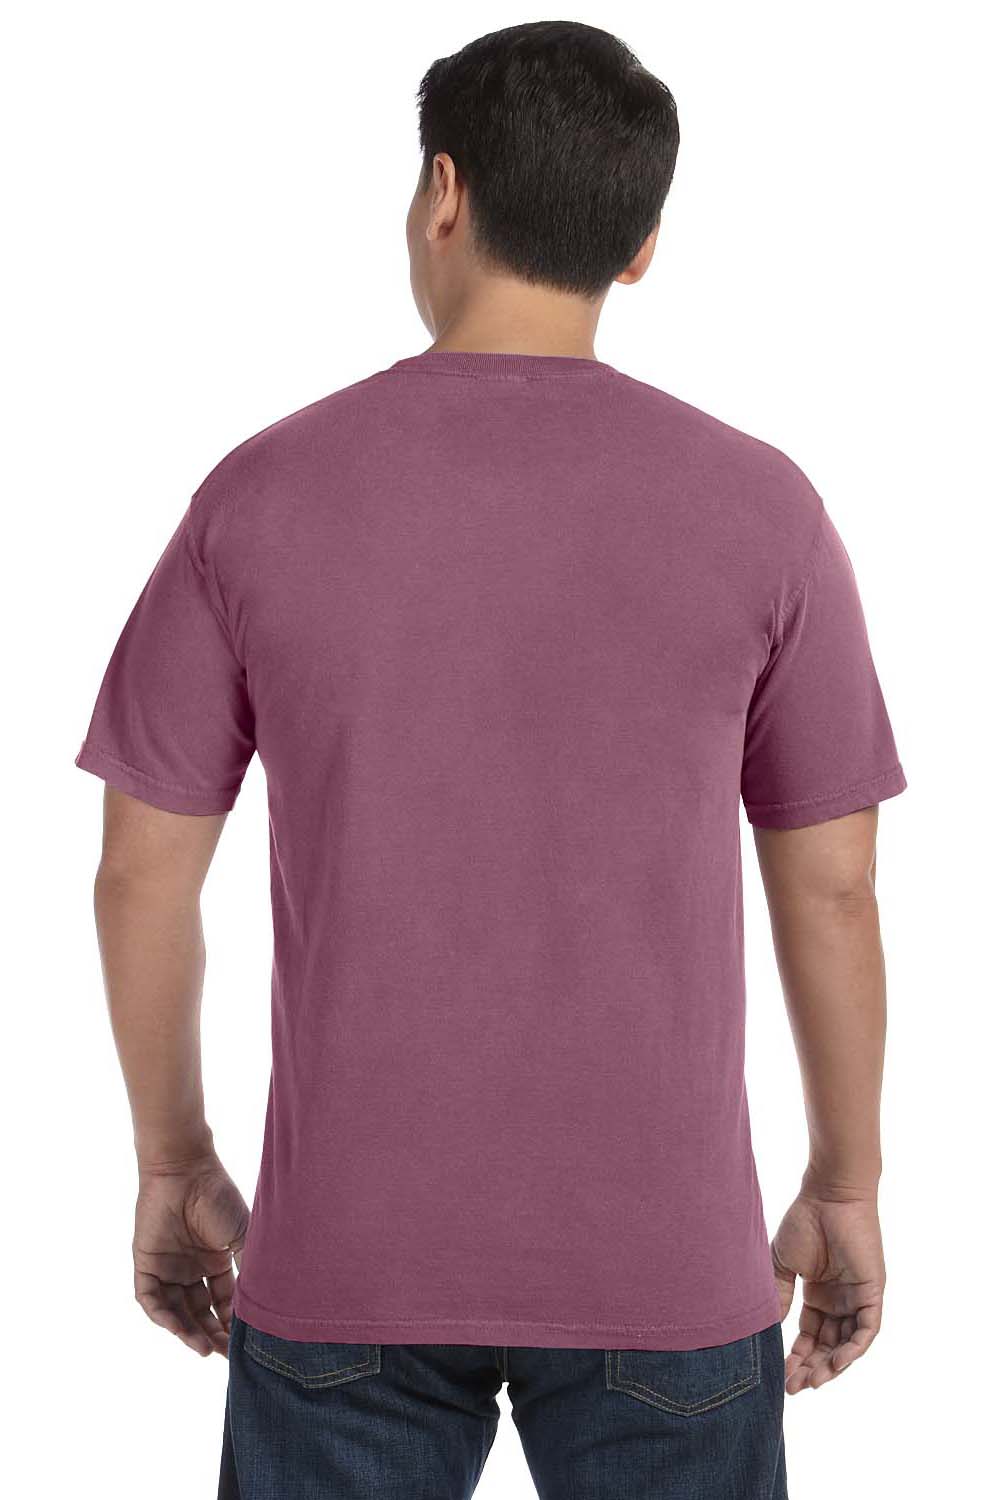 Comfort Colors C1717 Mens Short Sleeve Crewneck T-Shirt Berry Purple Back